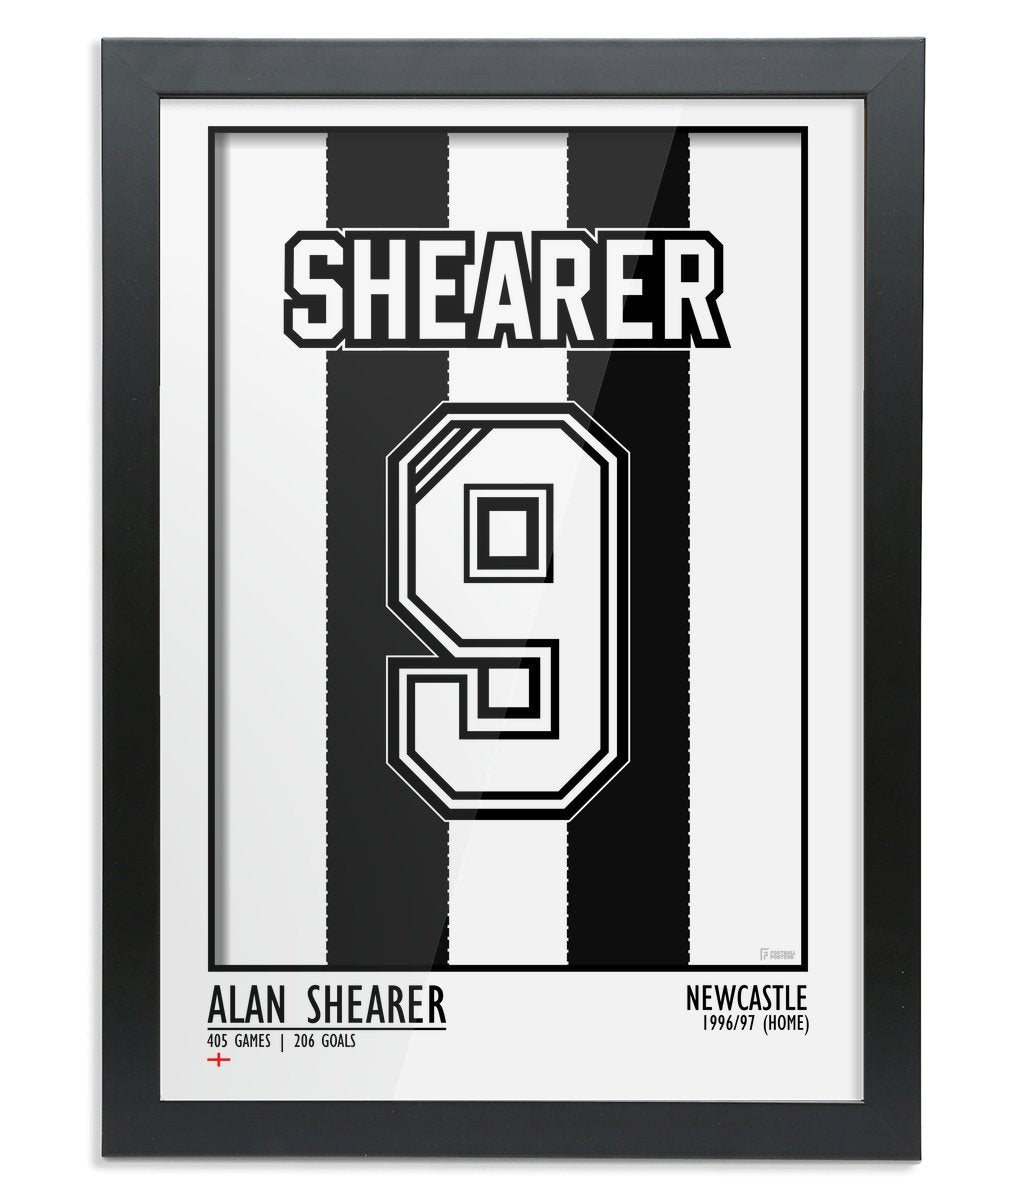 Shearer - Newcastle 96/97 (Home) | Framed A3 Legend Print - Football Posters